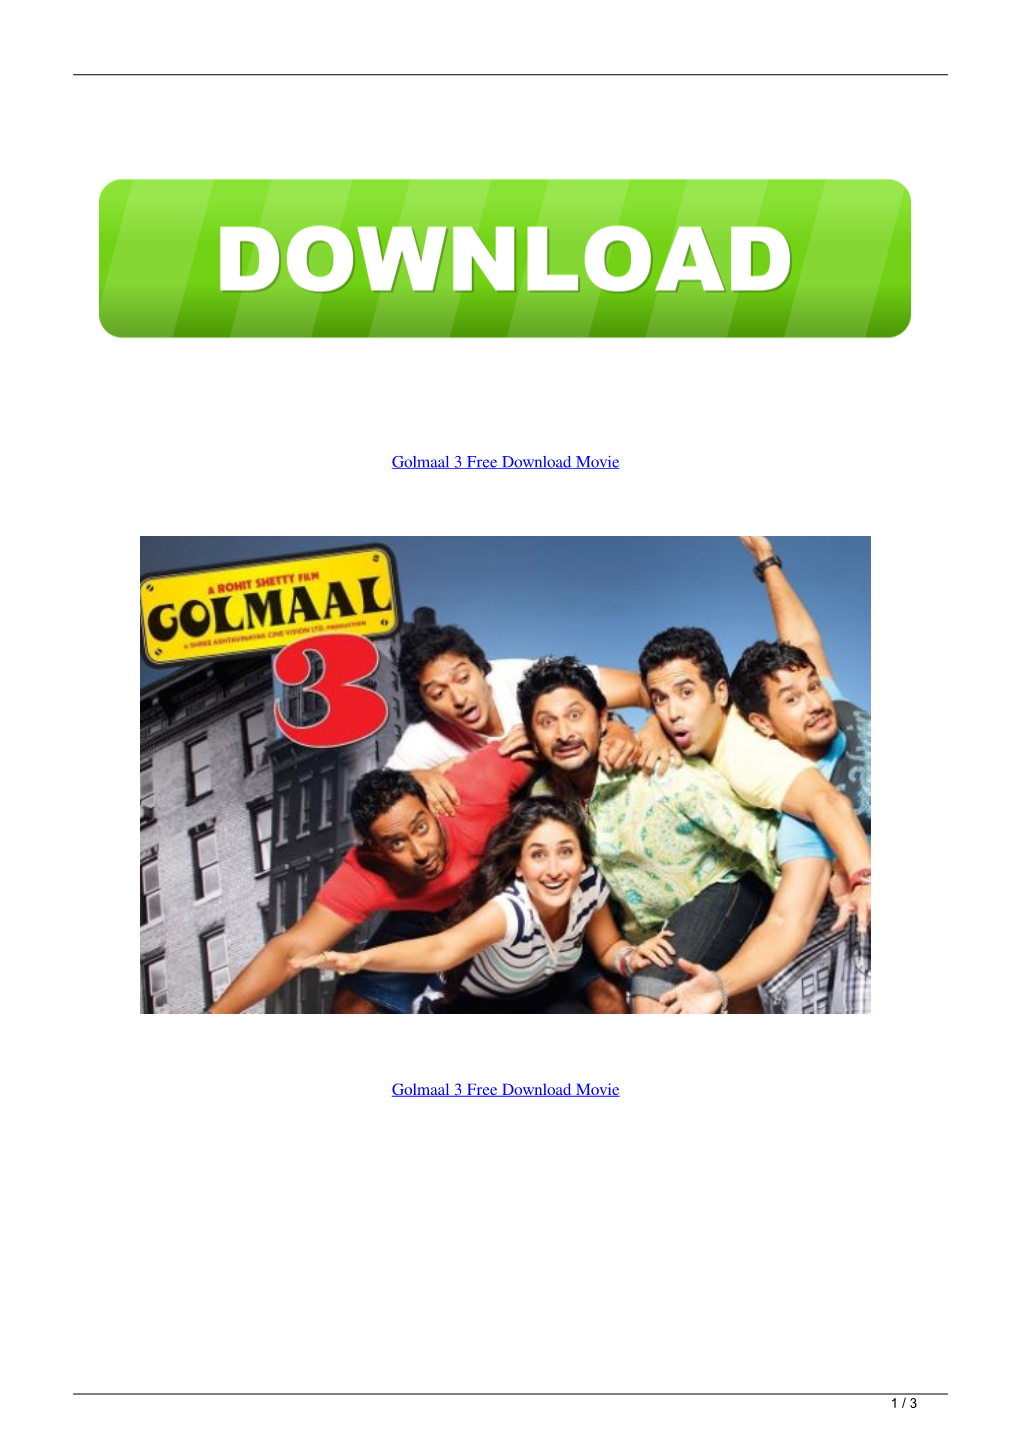 Golmaal 3 Free Download Movie